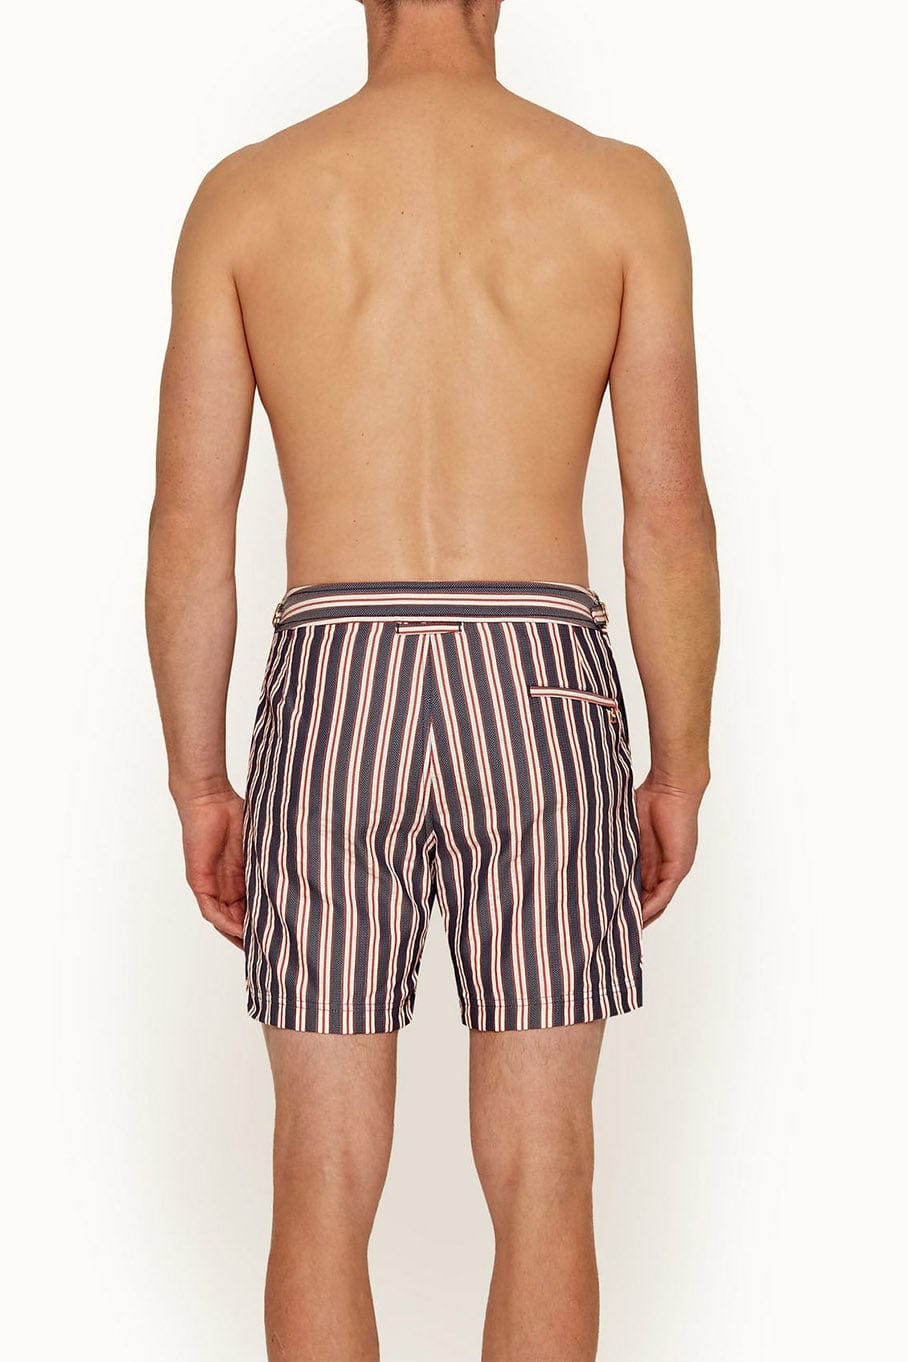 ORLEBAR BROWN-Bulldog Havre Stripe Swim shorts-